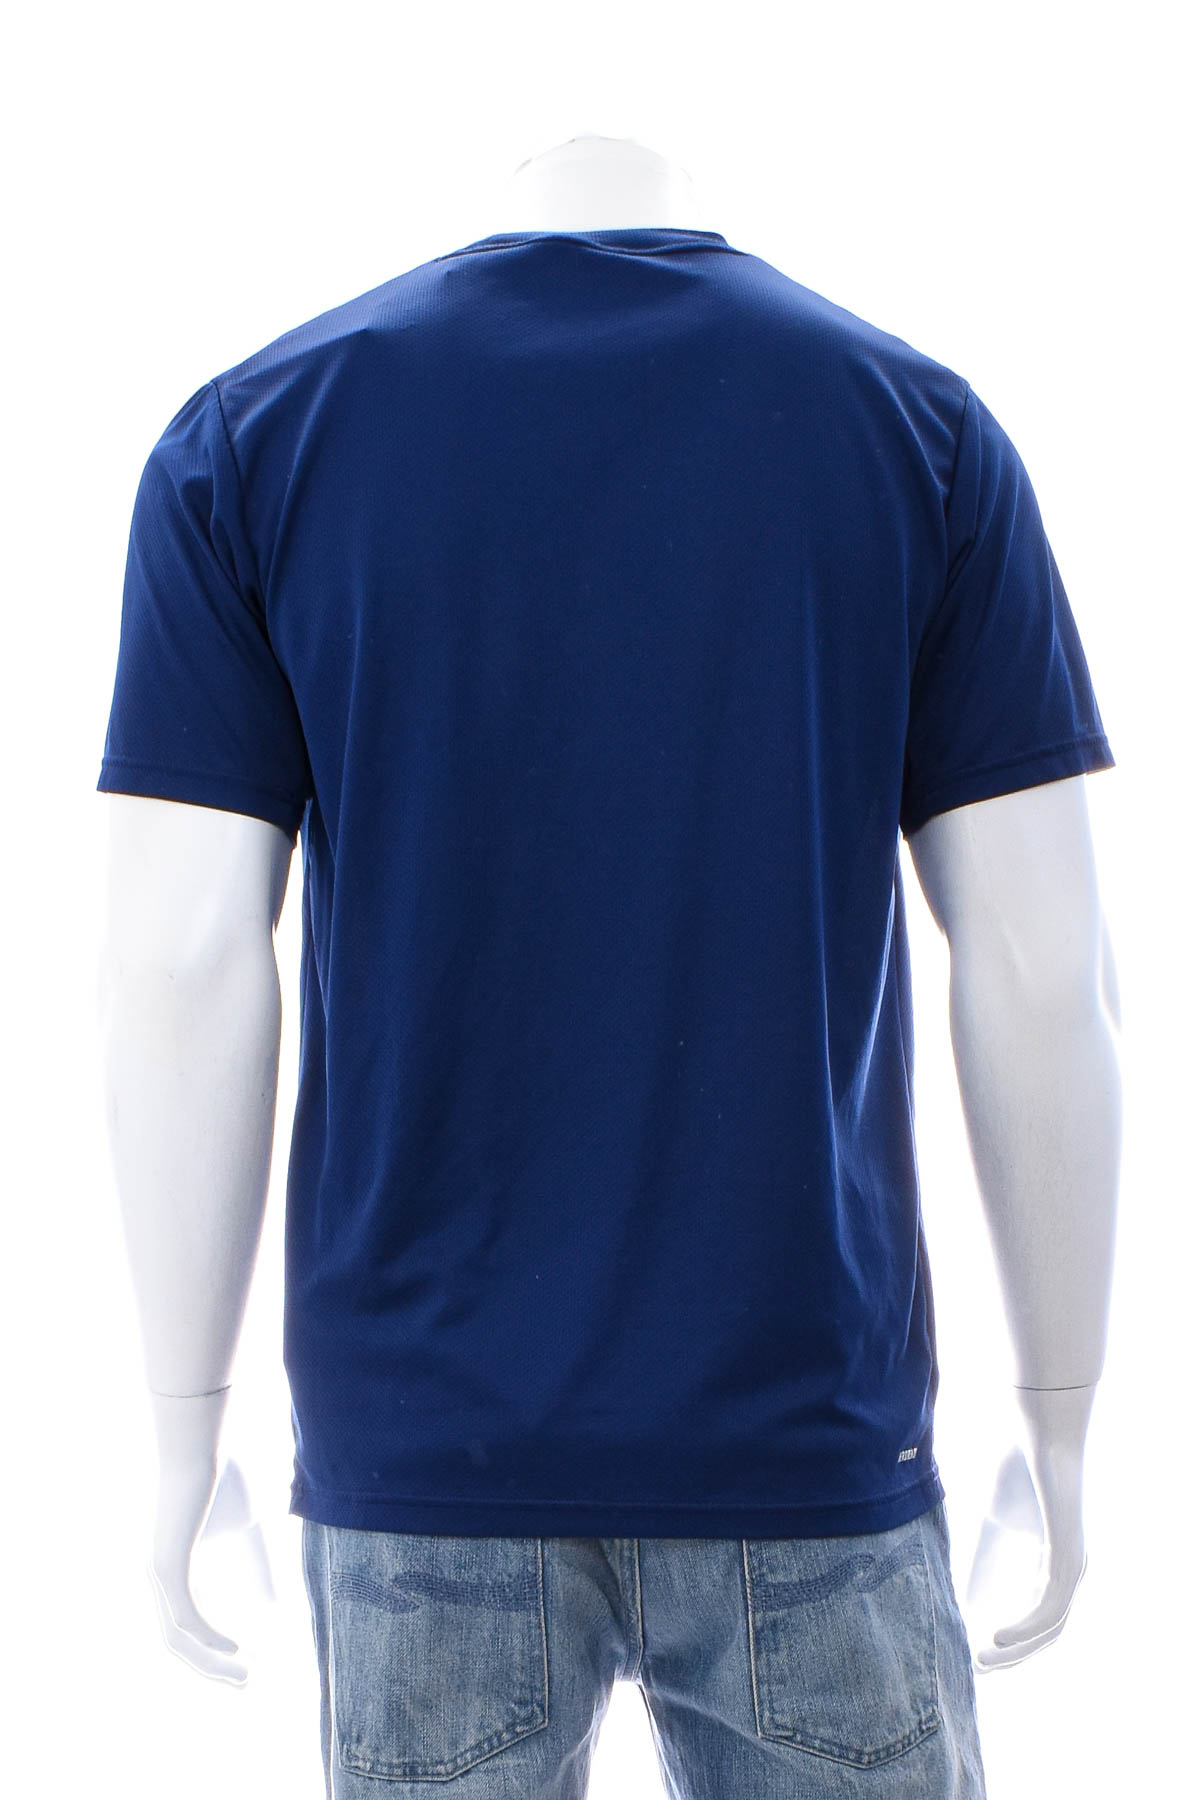 Men's T-shirt - Adidas - 1